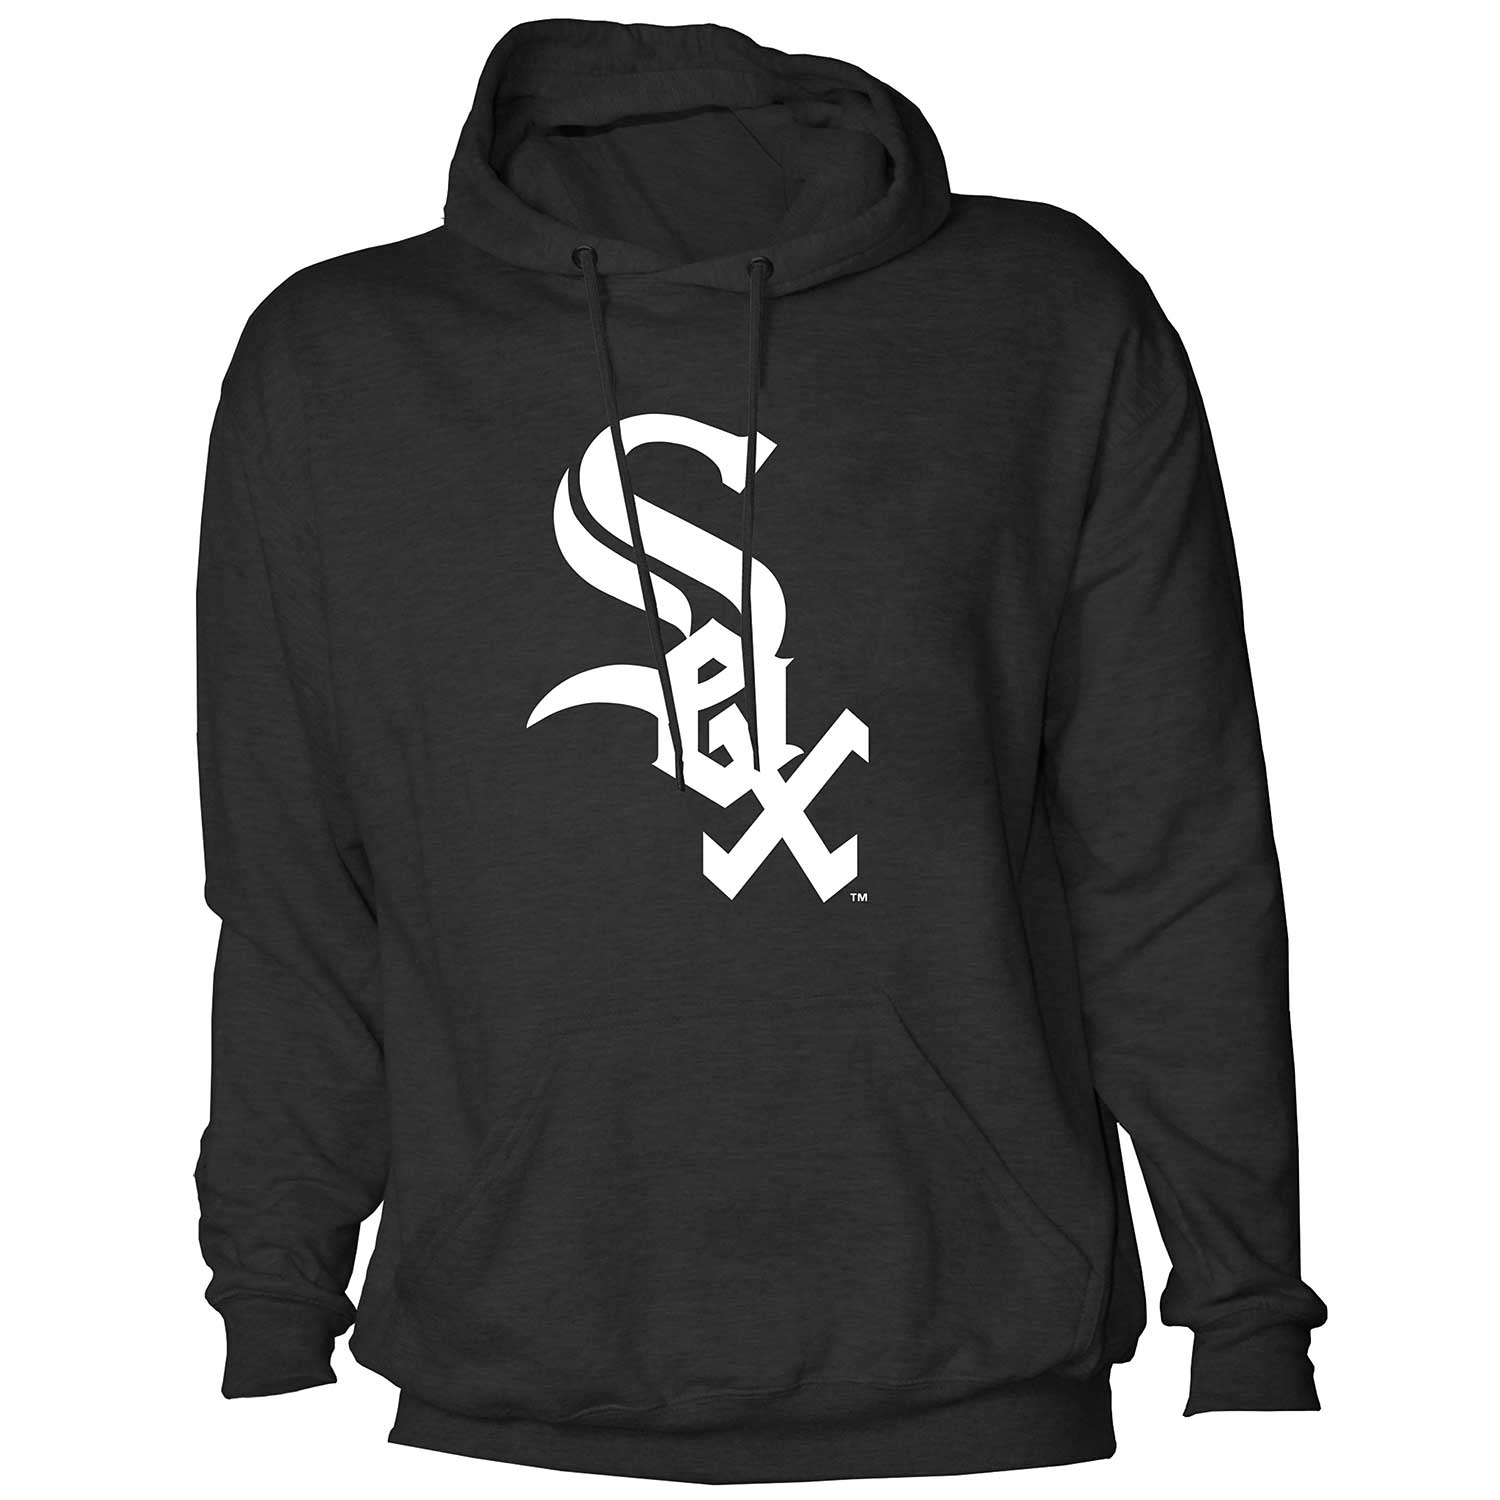 Stitches Chicago White Sox Primary Hooded Sweatshirt Large